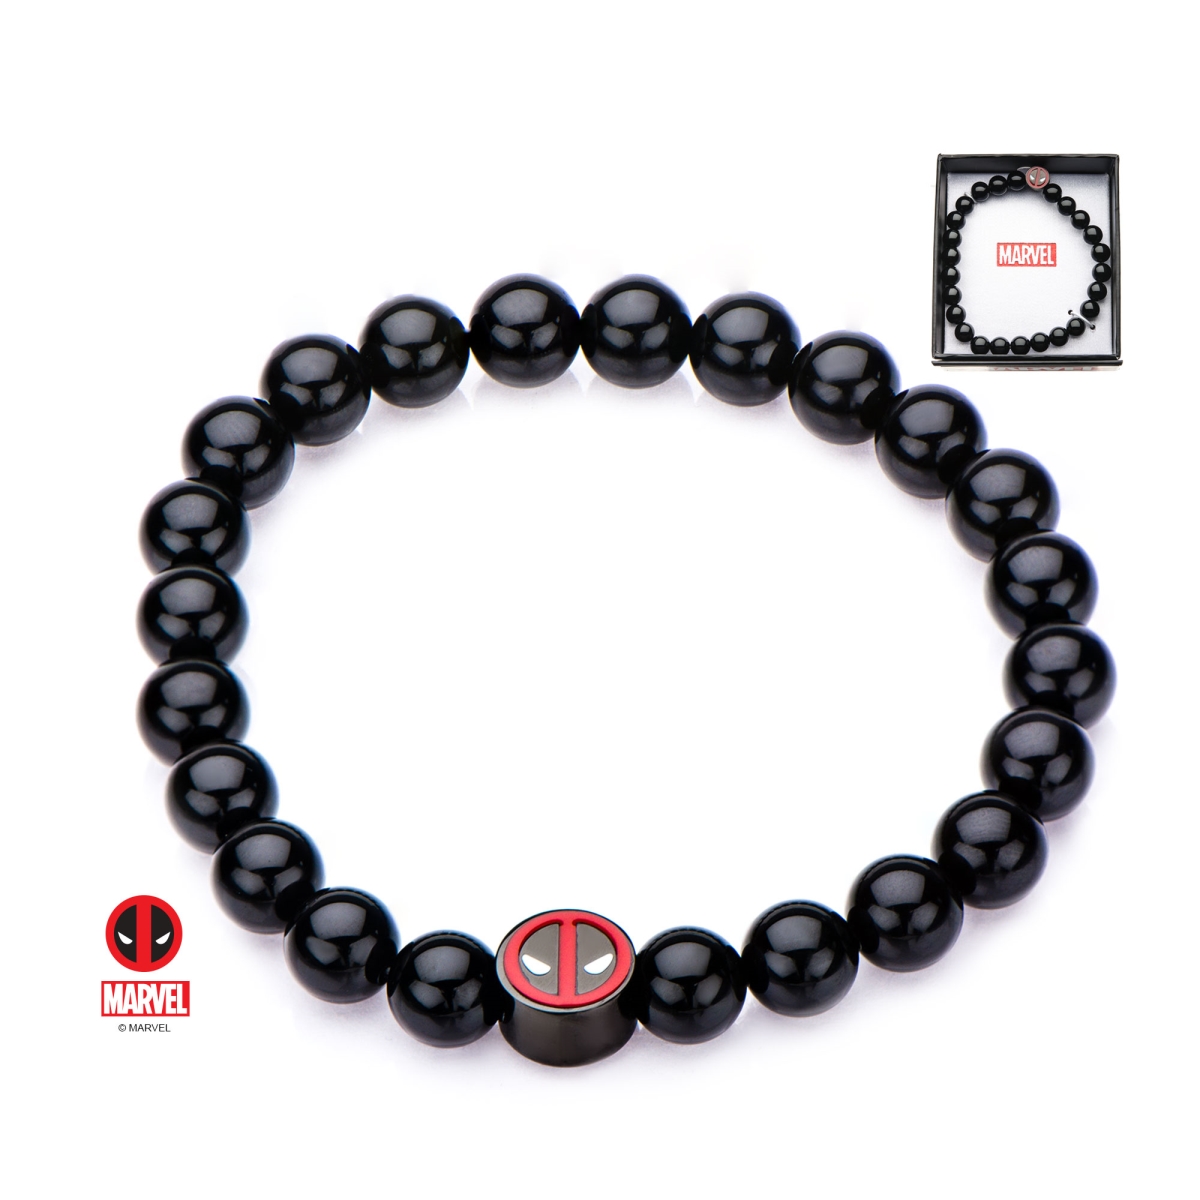 Ddplbr01 Deadpool With Black Agate Beads Bracelet